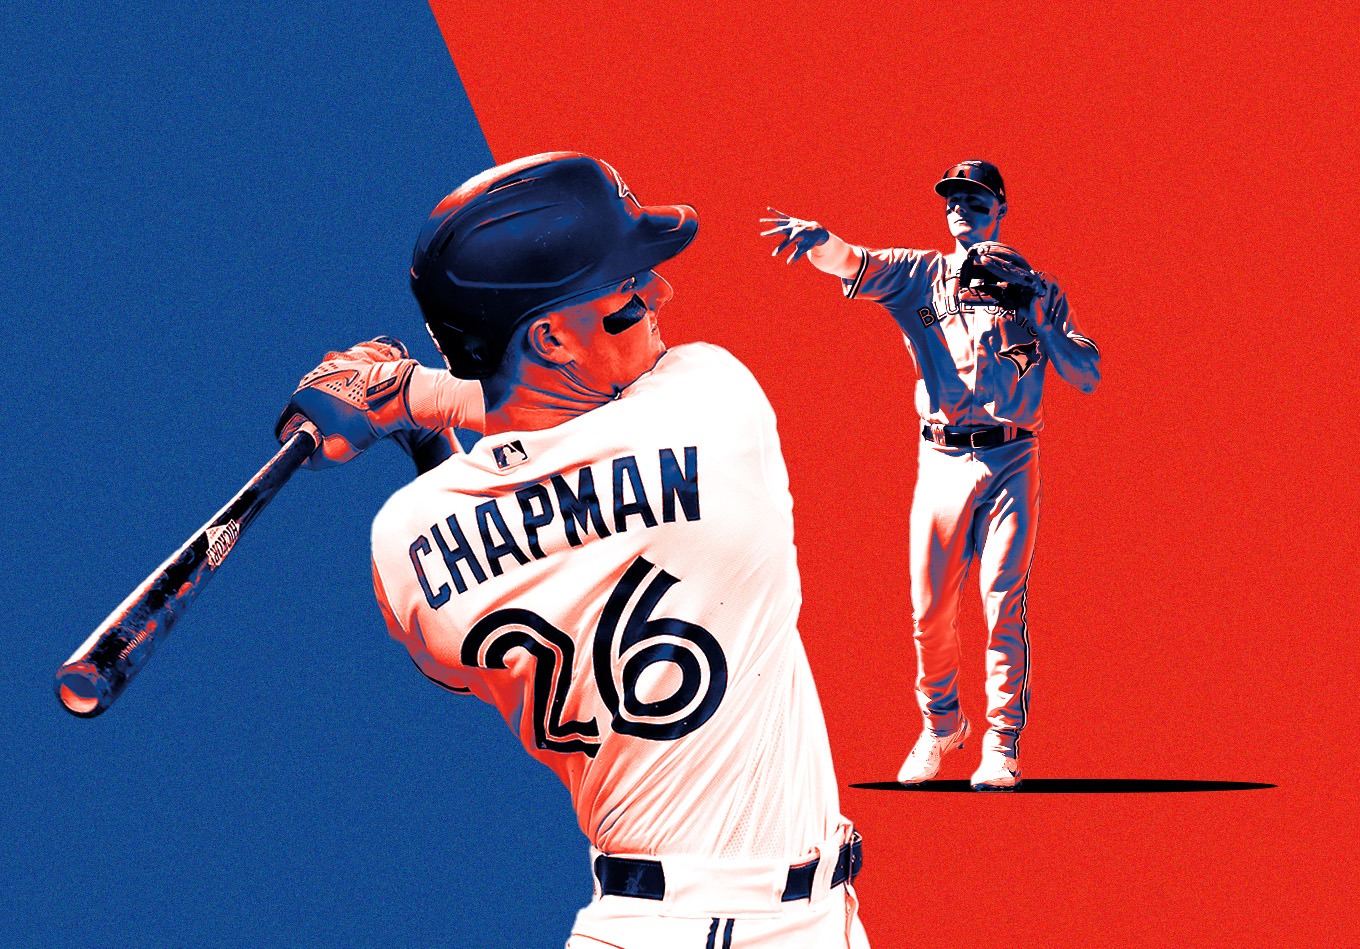 Blue Jays third baseman Chapman named American League player of the week